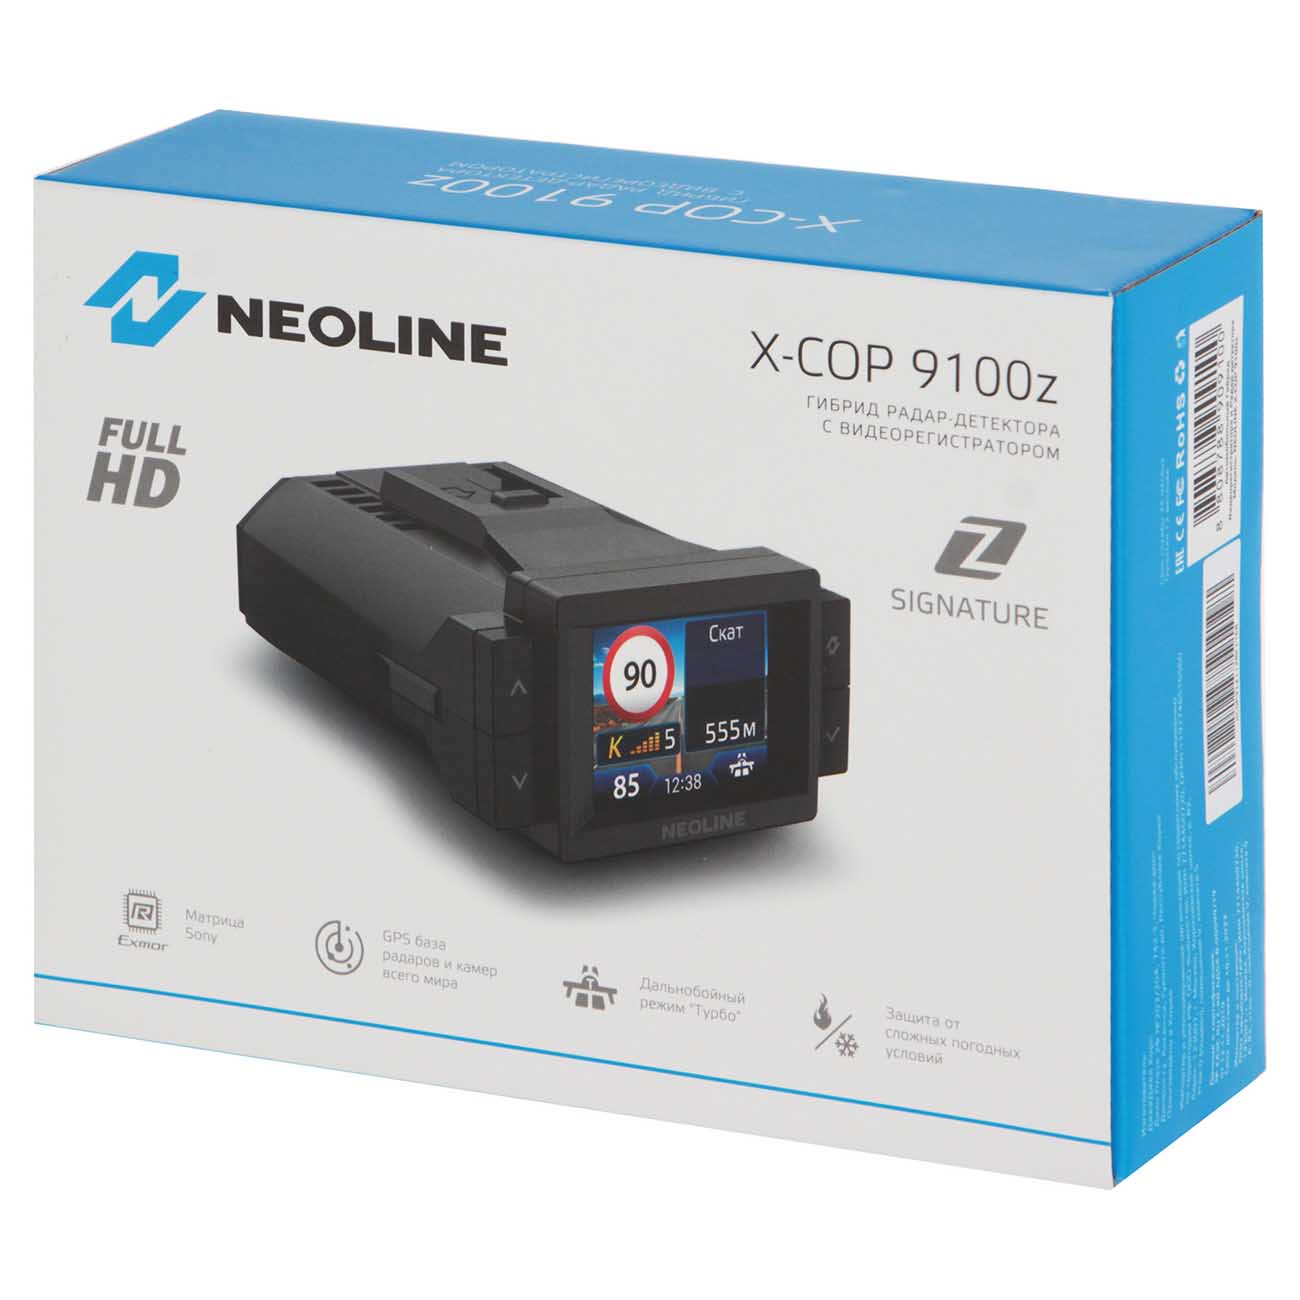 Neoline x cop 9100z. Антирадар Neoline 9100. X cop 9100z. Neoline x-cop9100d s/n: xcop91d1221k0685n.